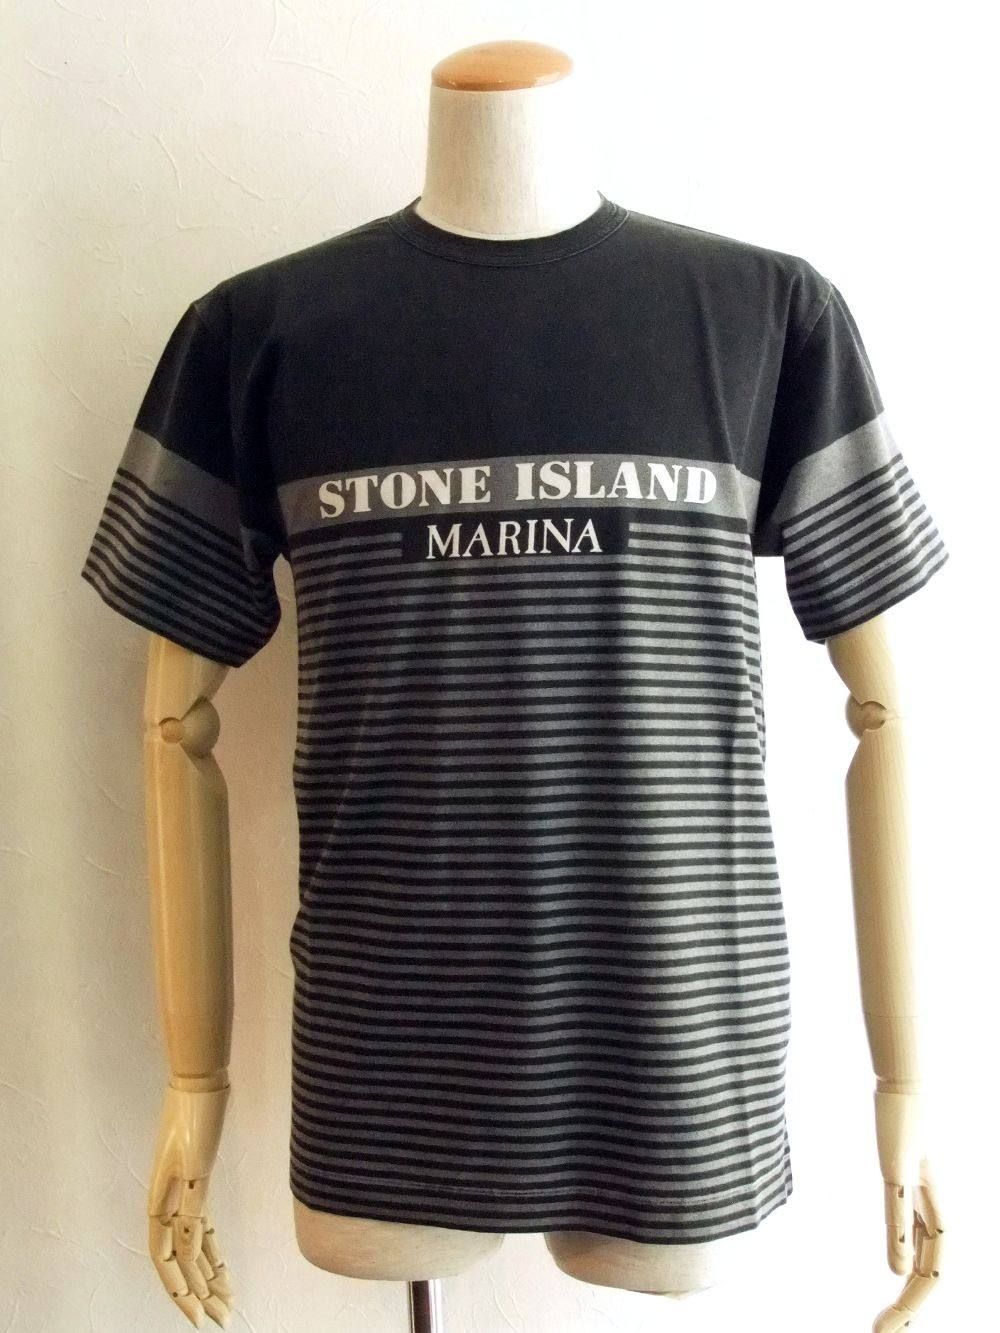 STONE ISLAND - STONE ISLAND (ストーン アイランド) マリーナ ボーダー S/S T-シャツ  MARINA_CORROSION PRINT | 4.444glad